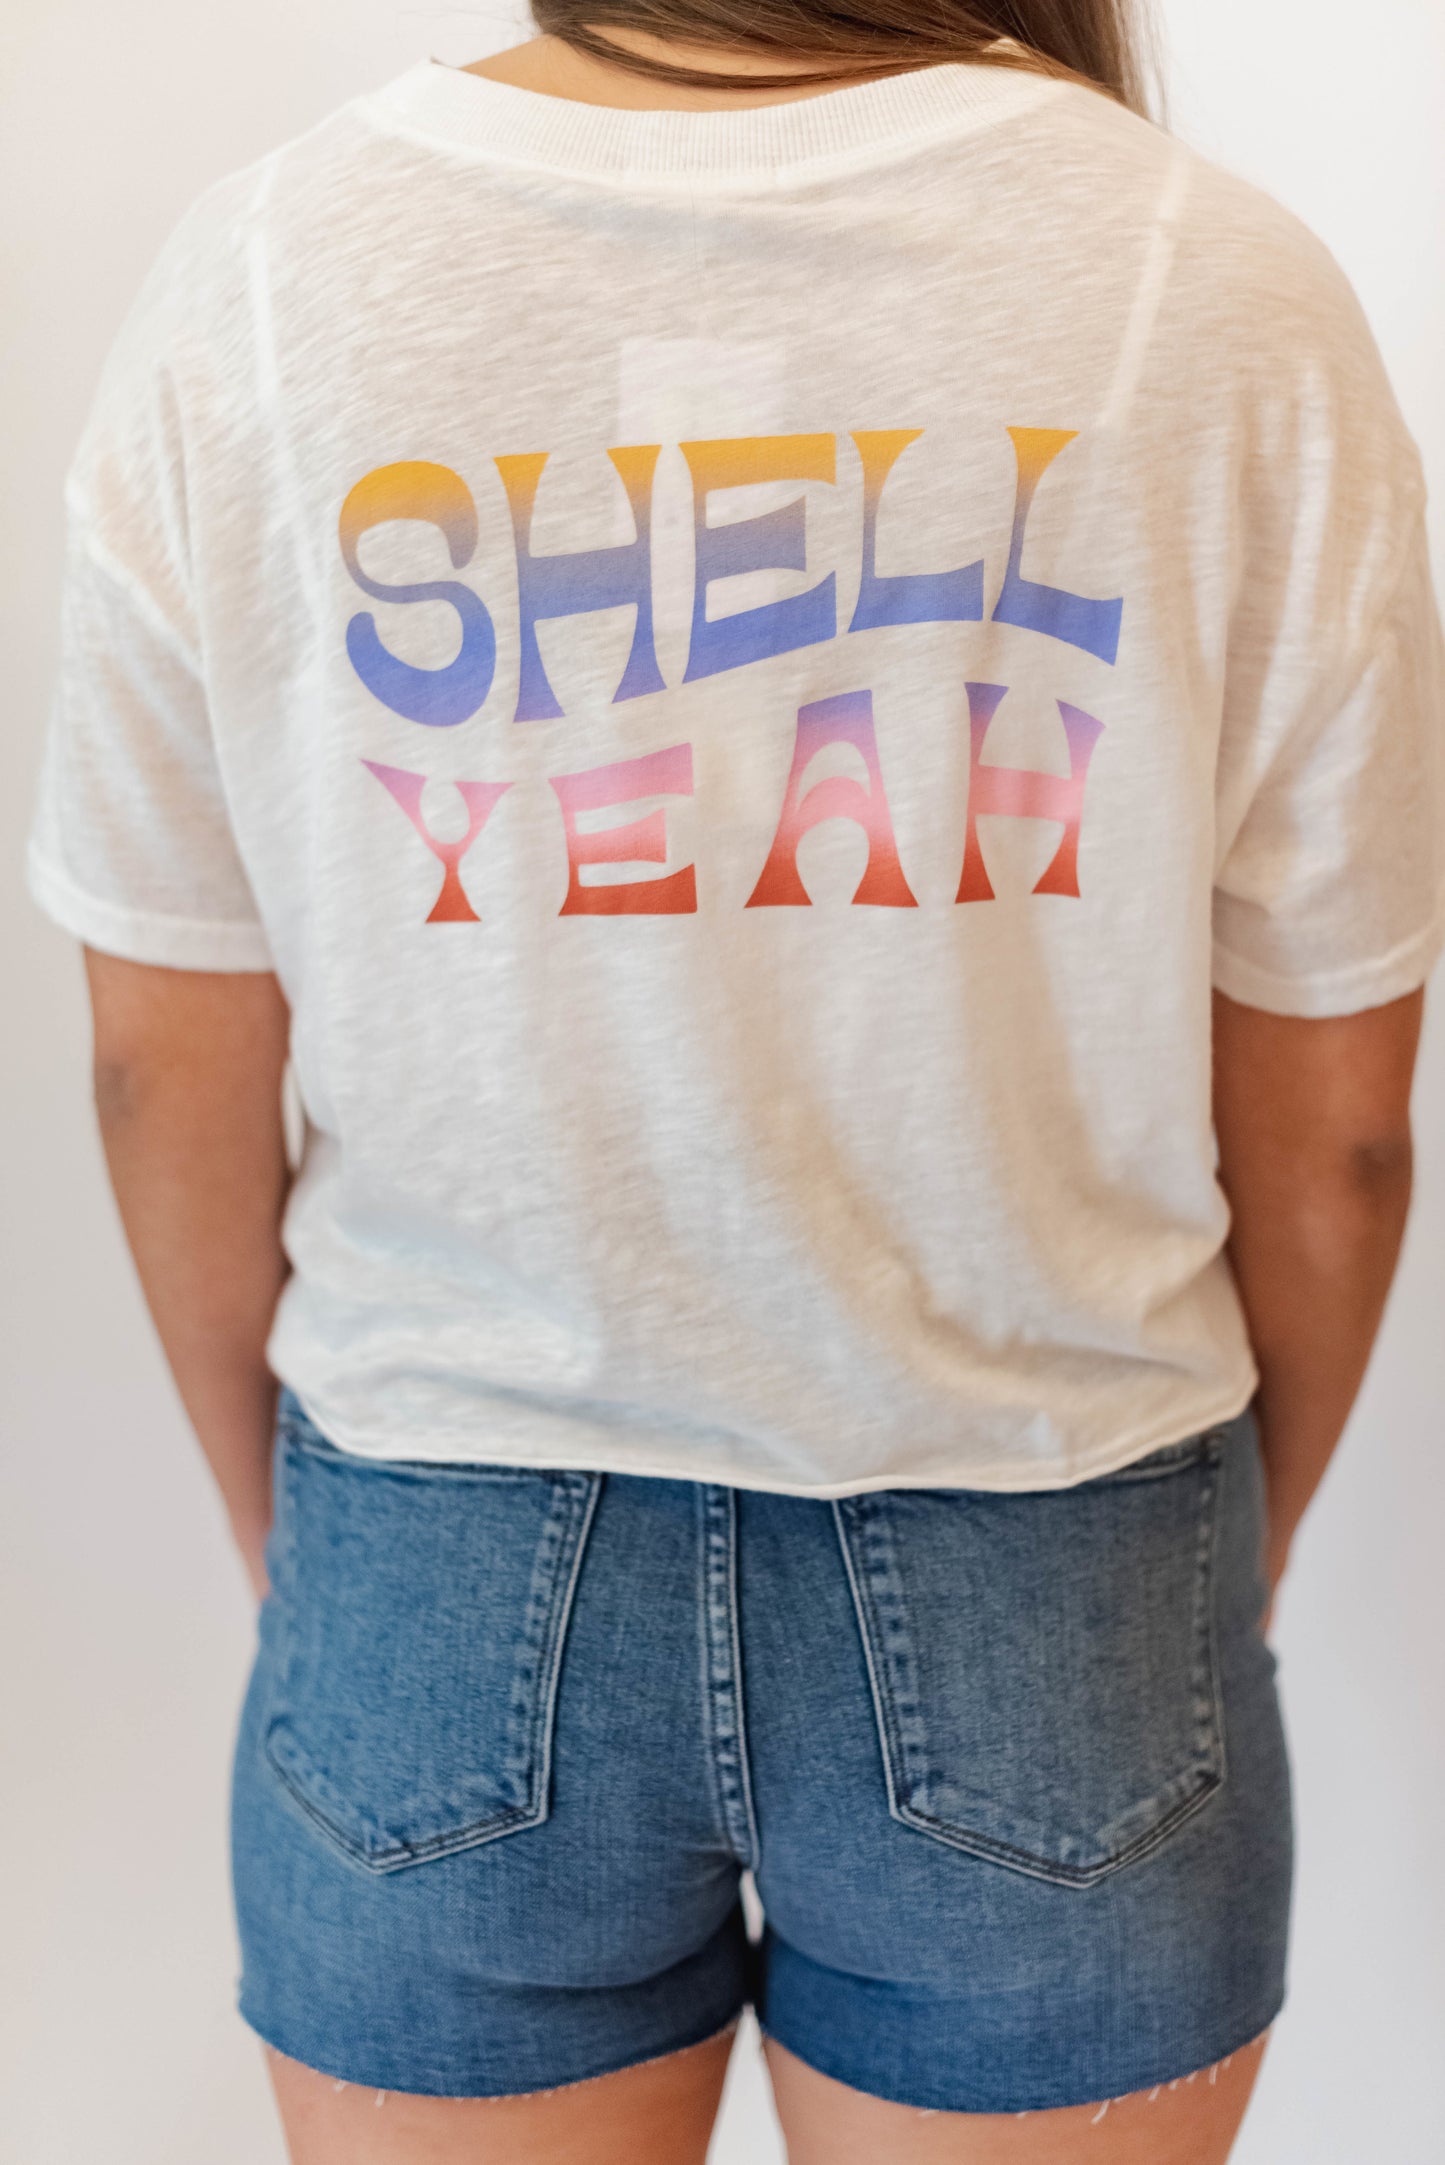 Shell Yeah Tee